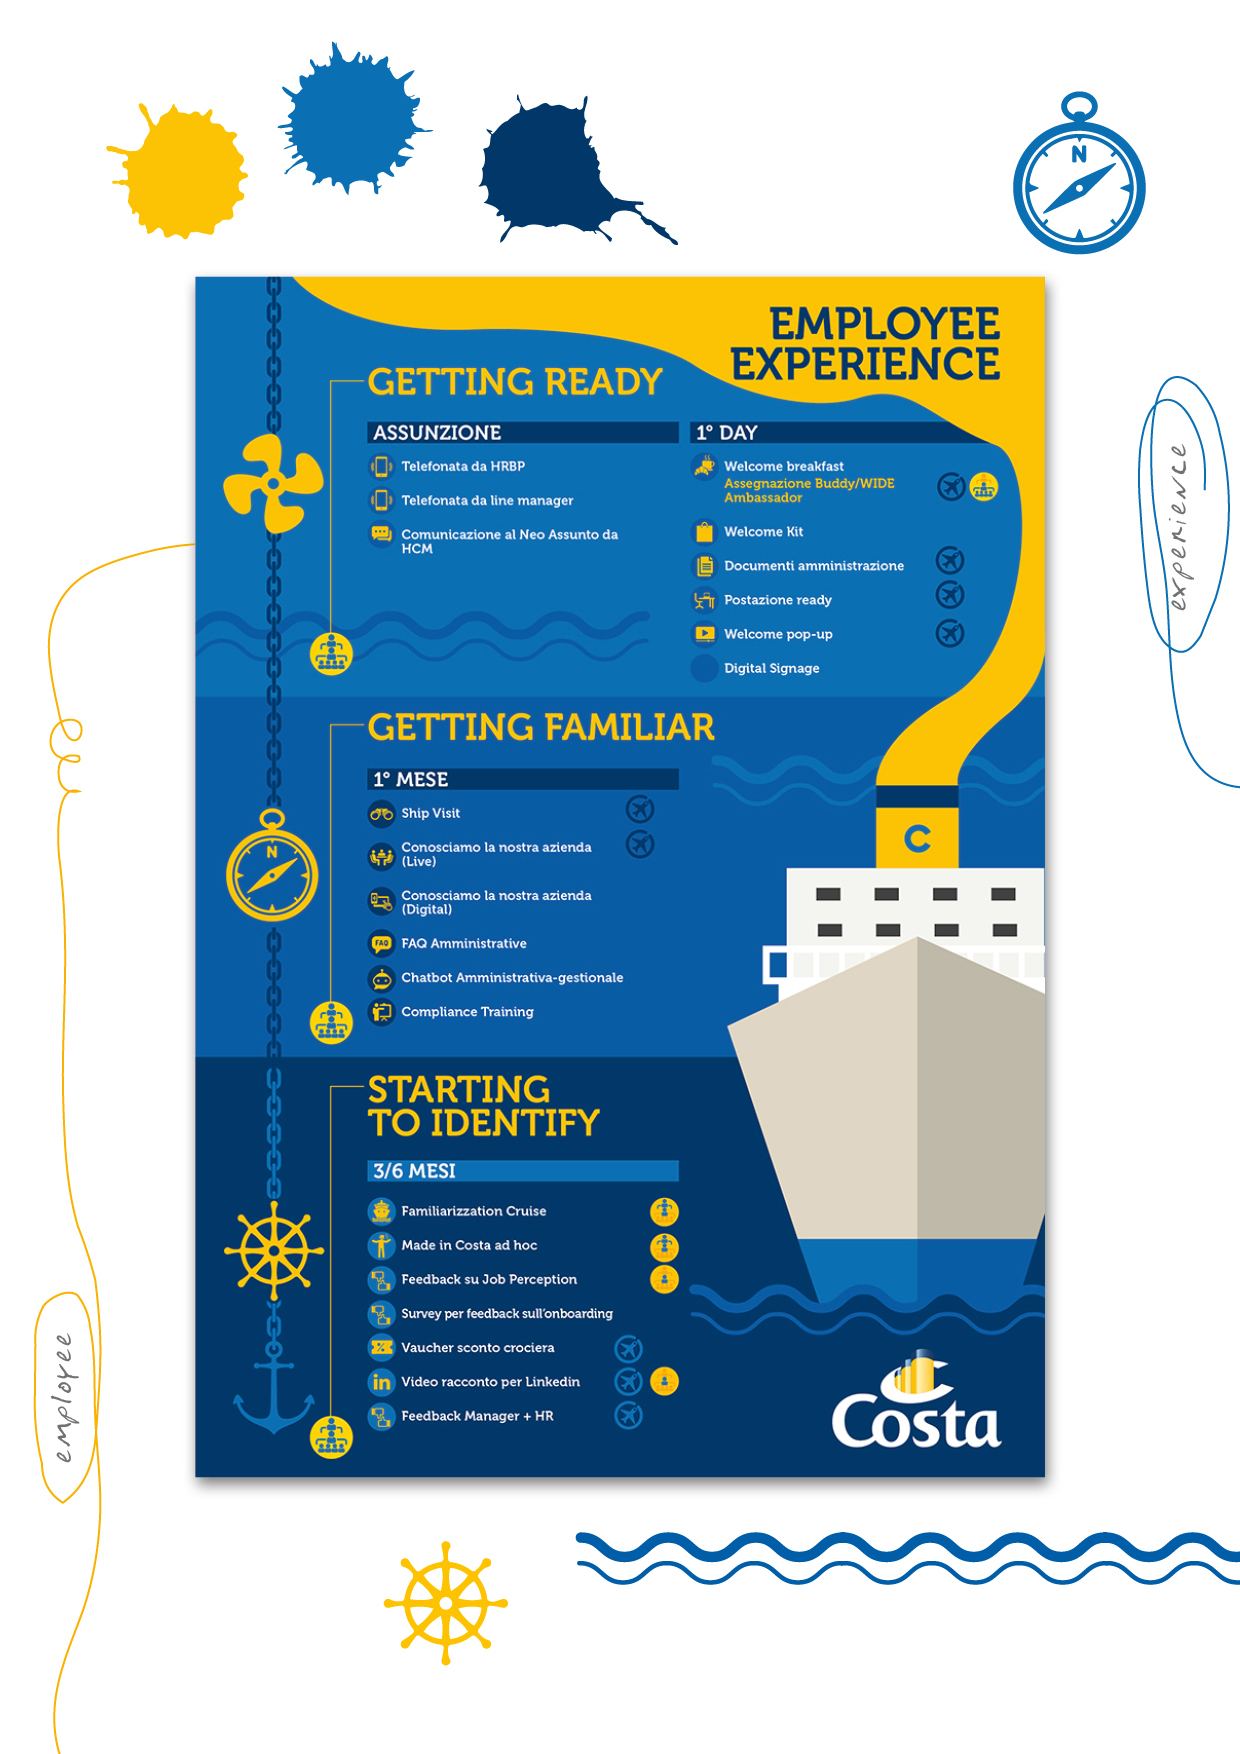 Employee Experience (Costa)